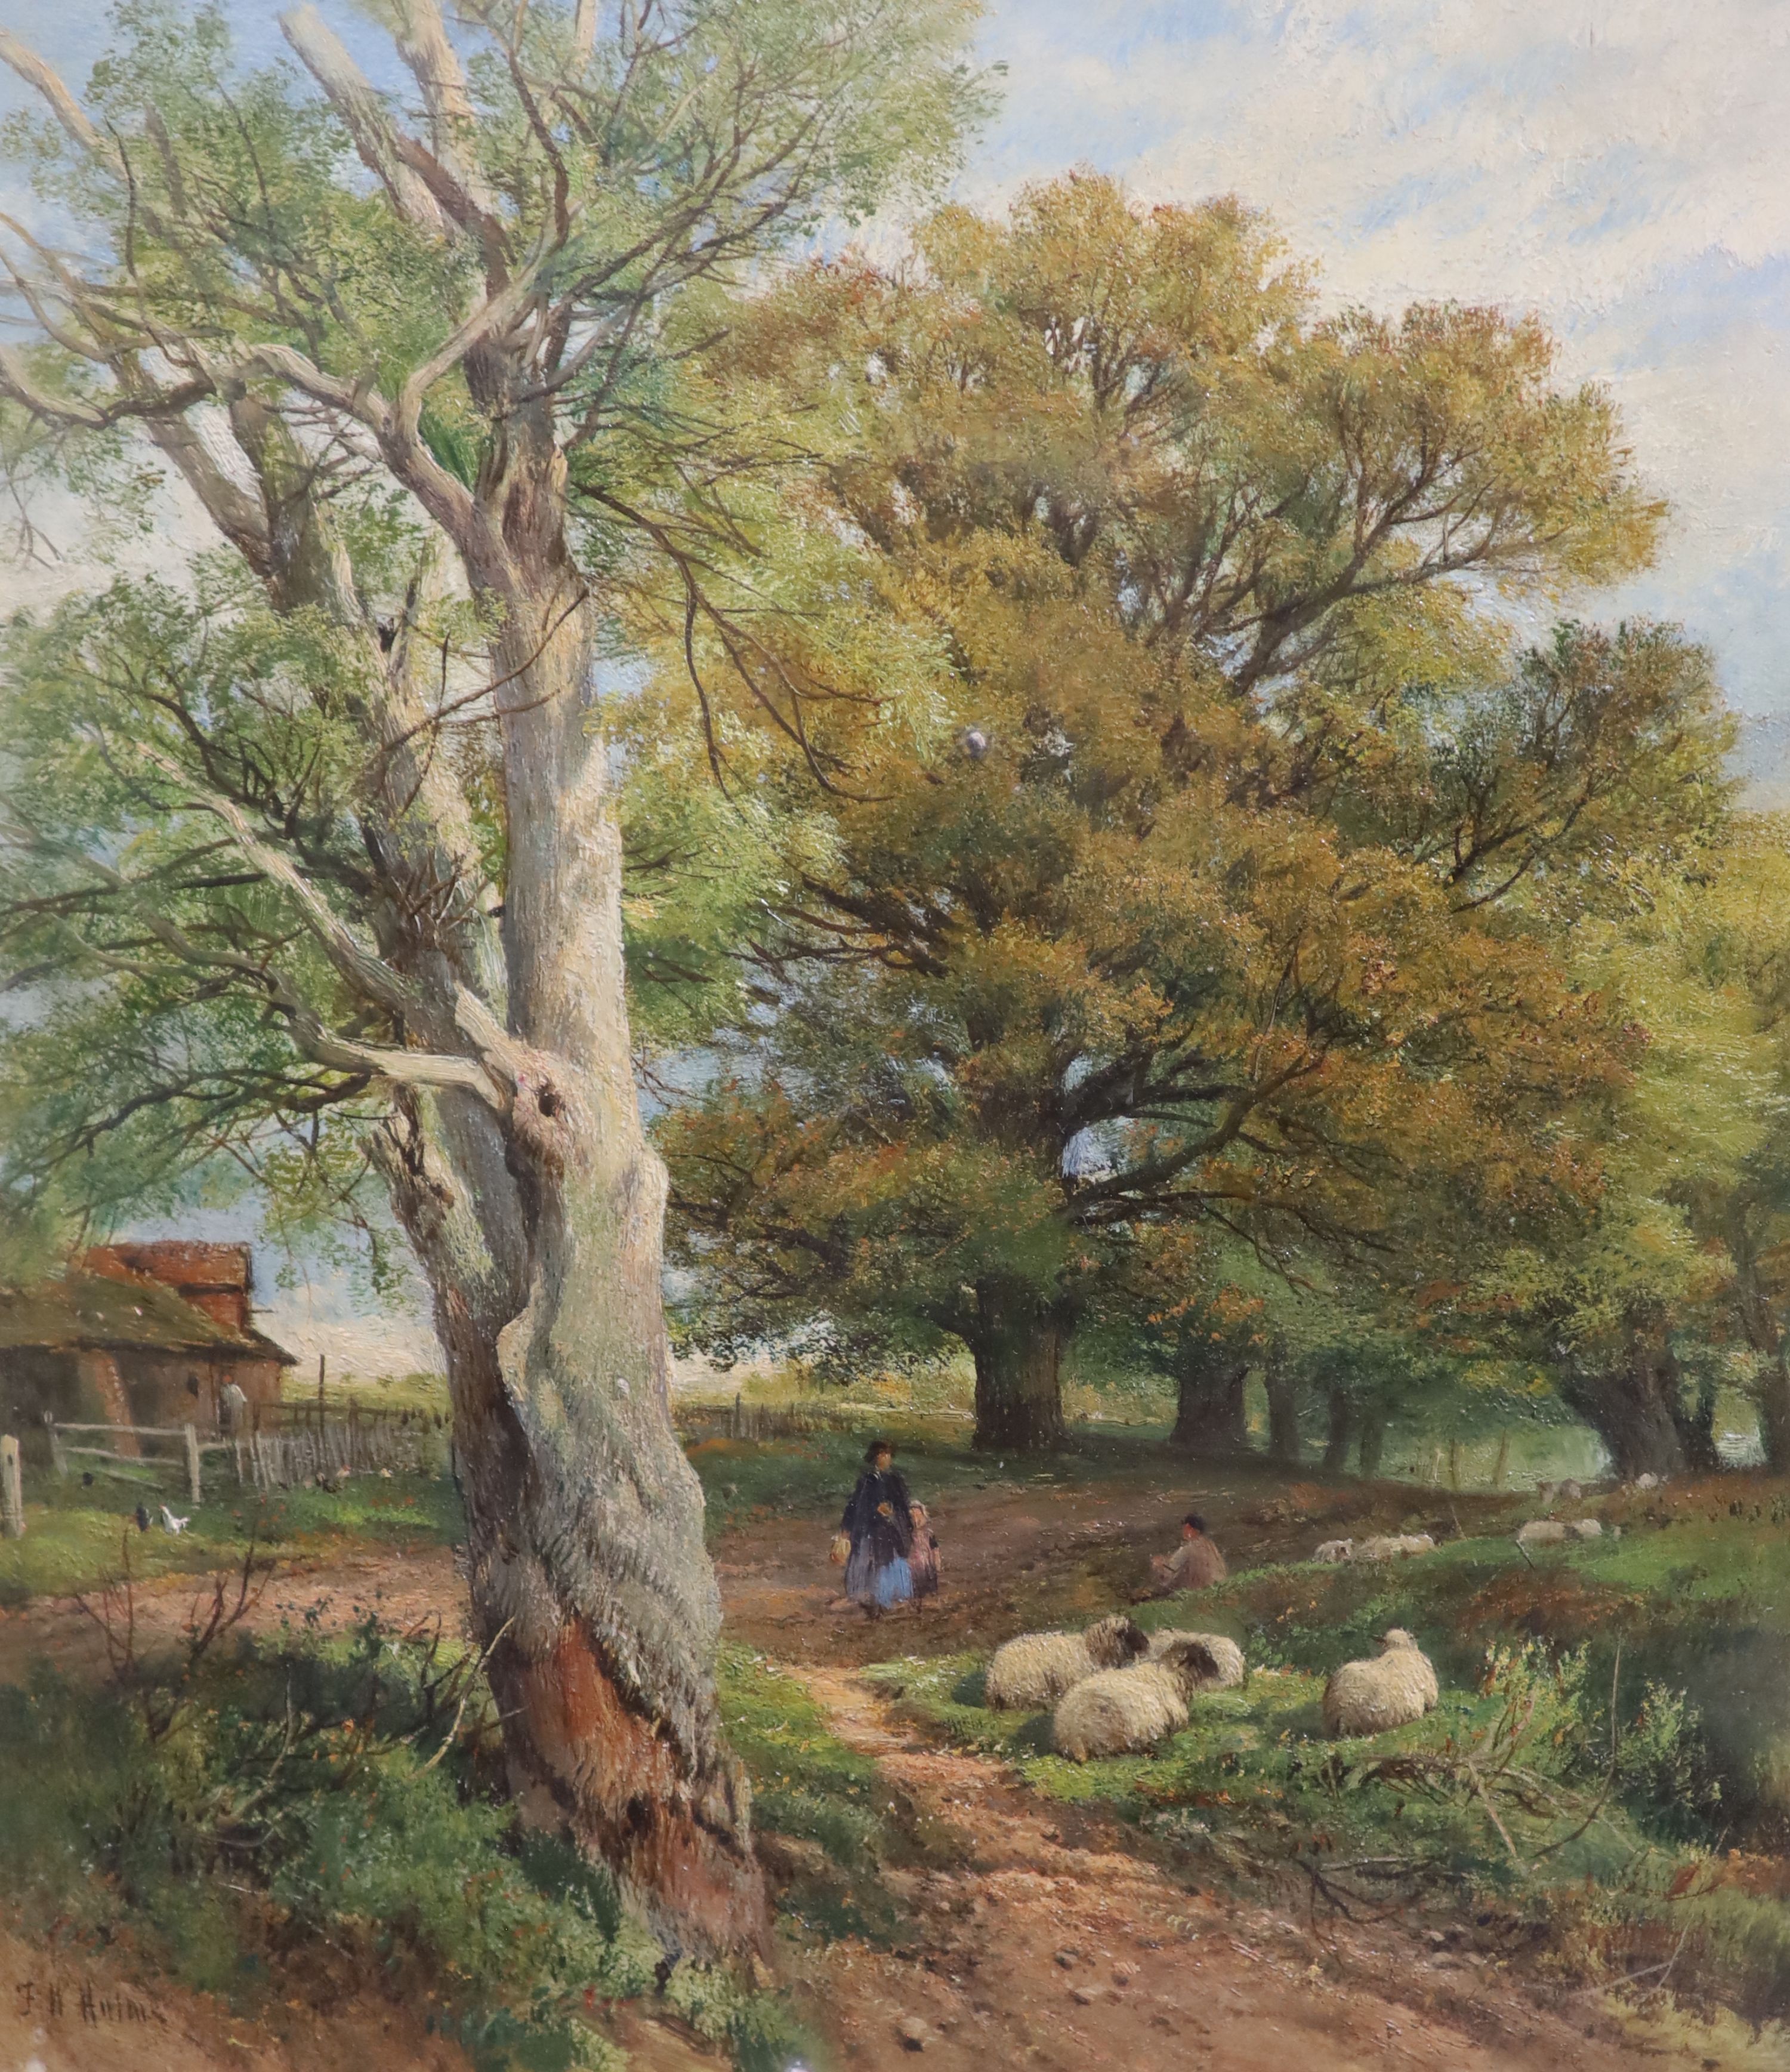 Frederick W Hulme, A Shady Glade & The Road to the Farm, Oil on board, 35 x 30 cm.